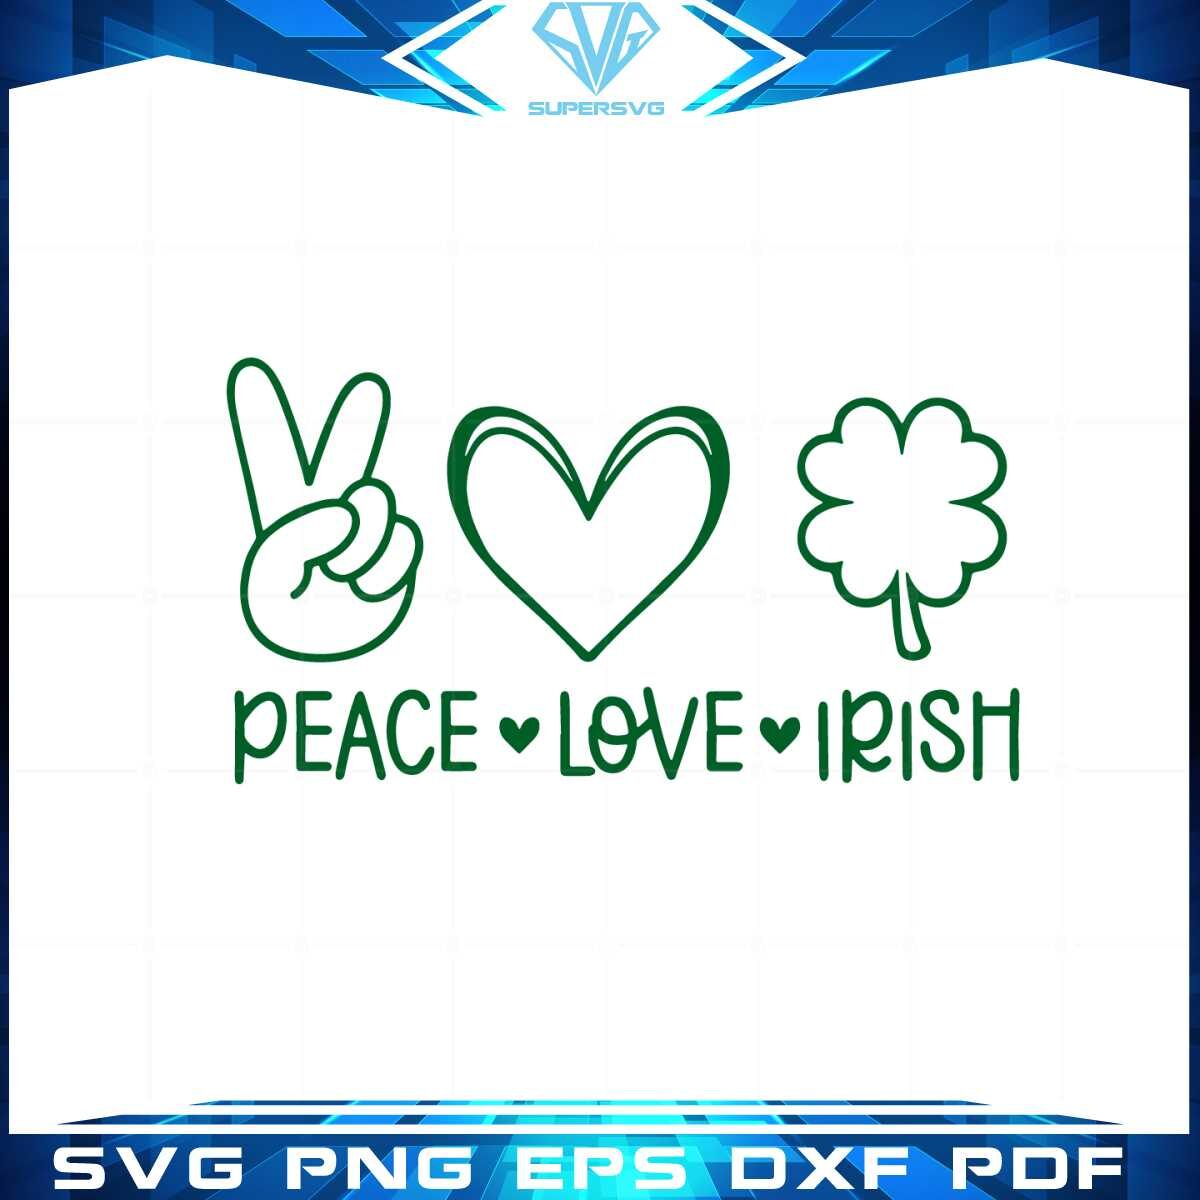 peace-love-irish-st-patricks-day-shamrocks-svg-cutting-files